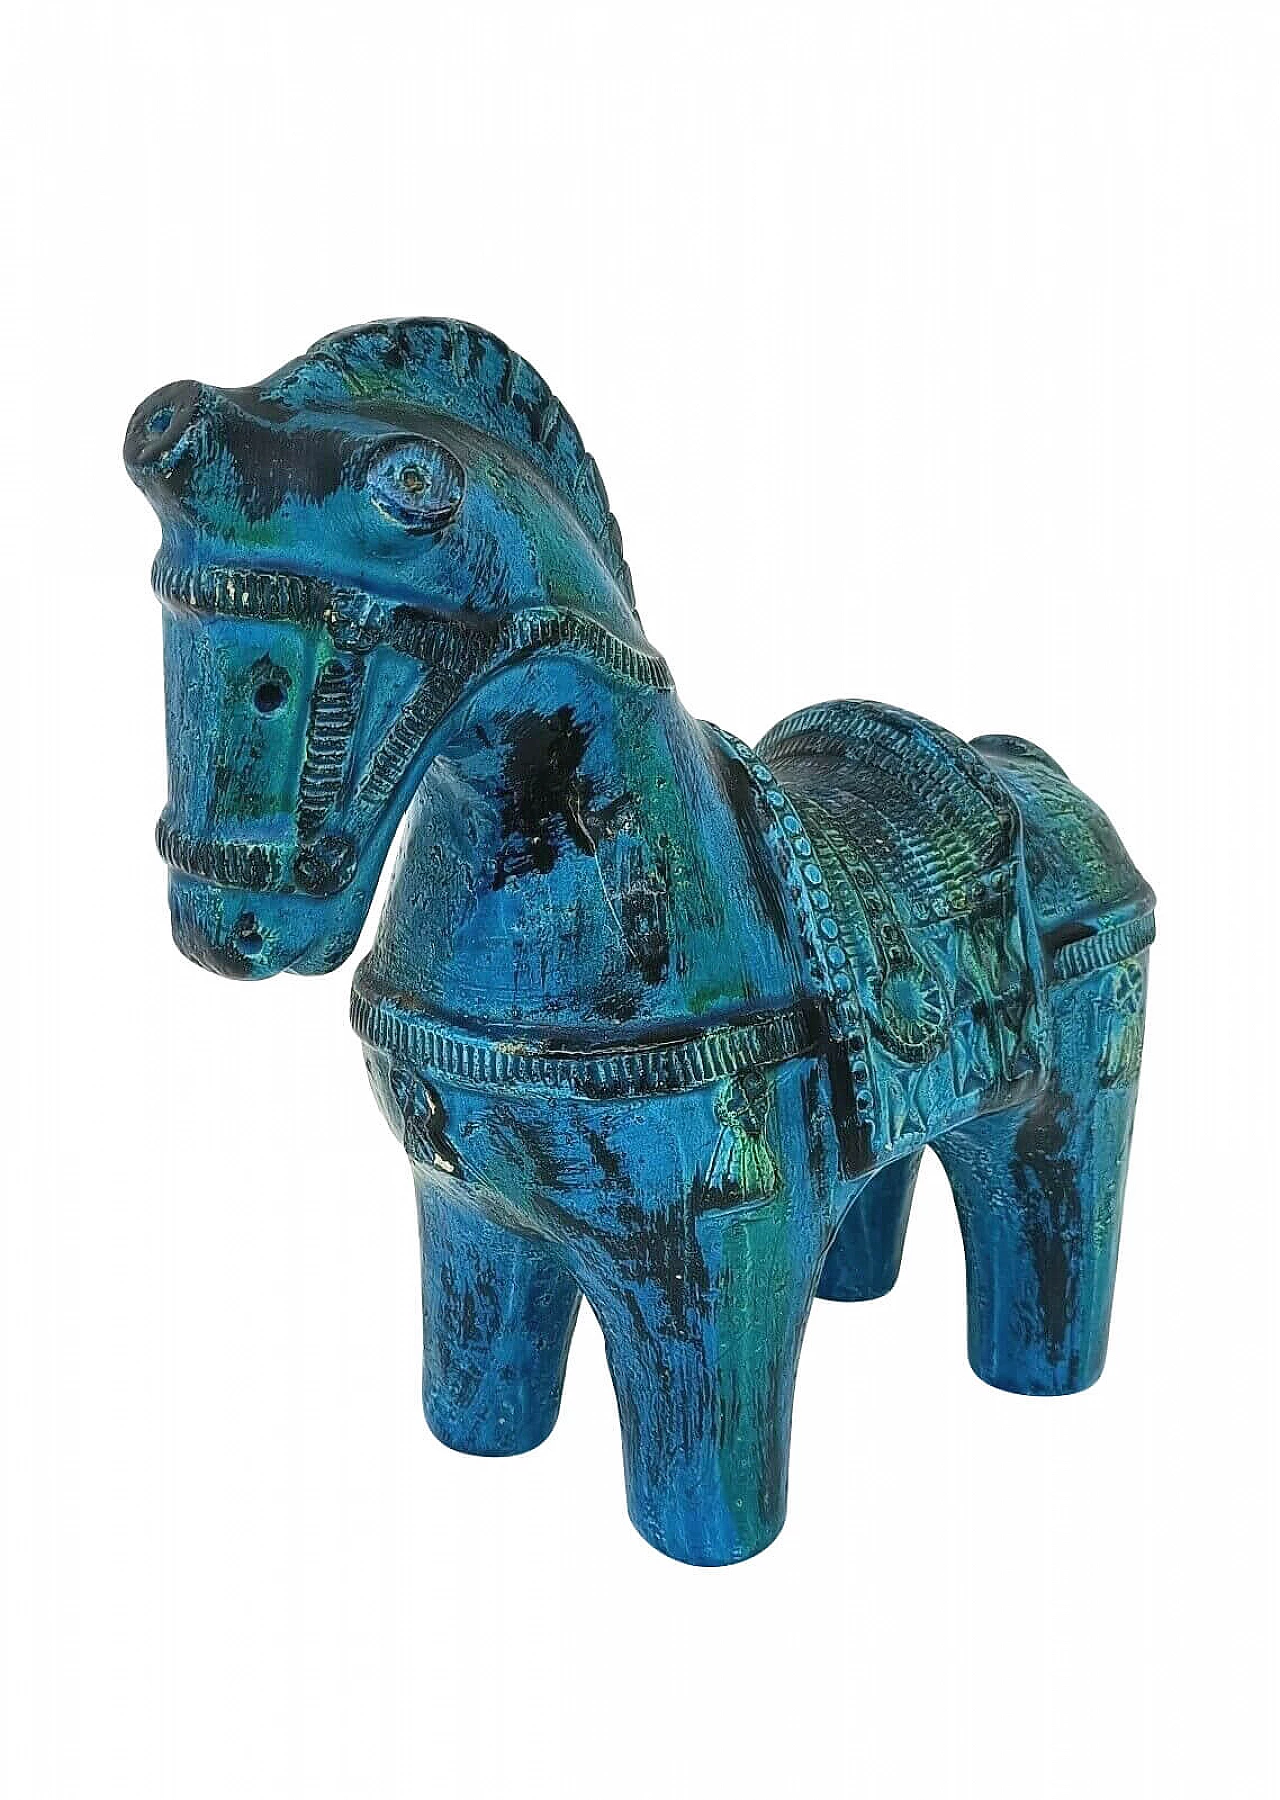 Cavallino Rimini blu in ceramica smaltata di Aldo Londi per Bitossi, anni '70 1256917